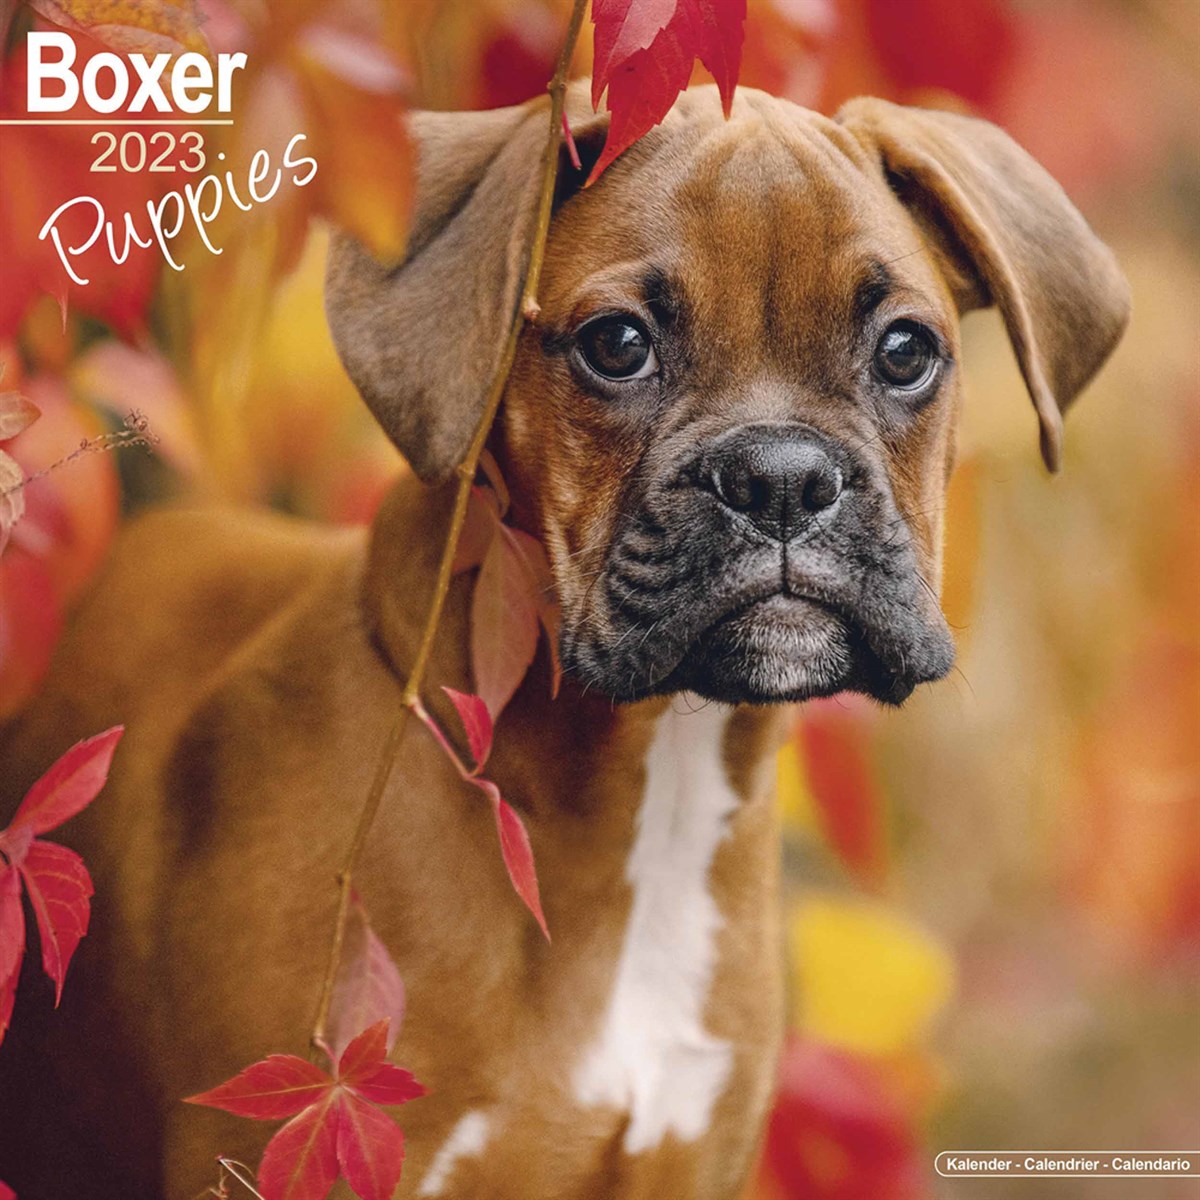 Boxer Puppies 2023 Calendars